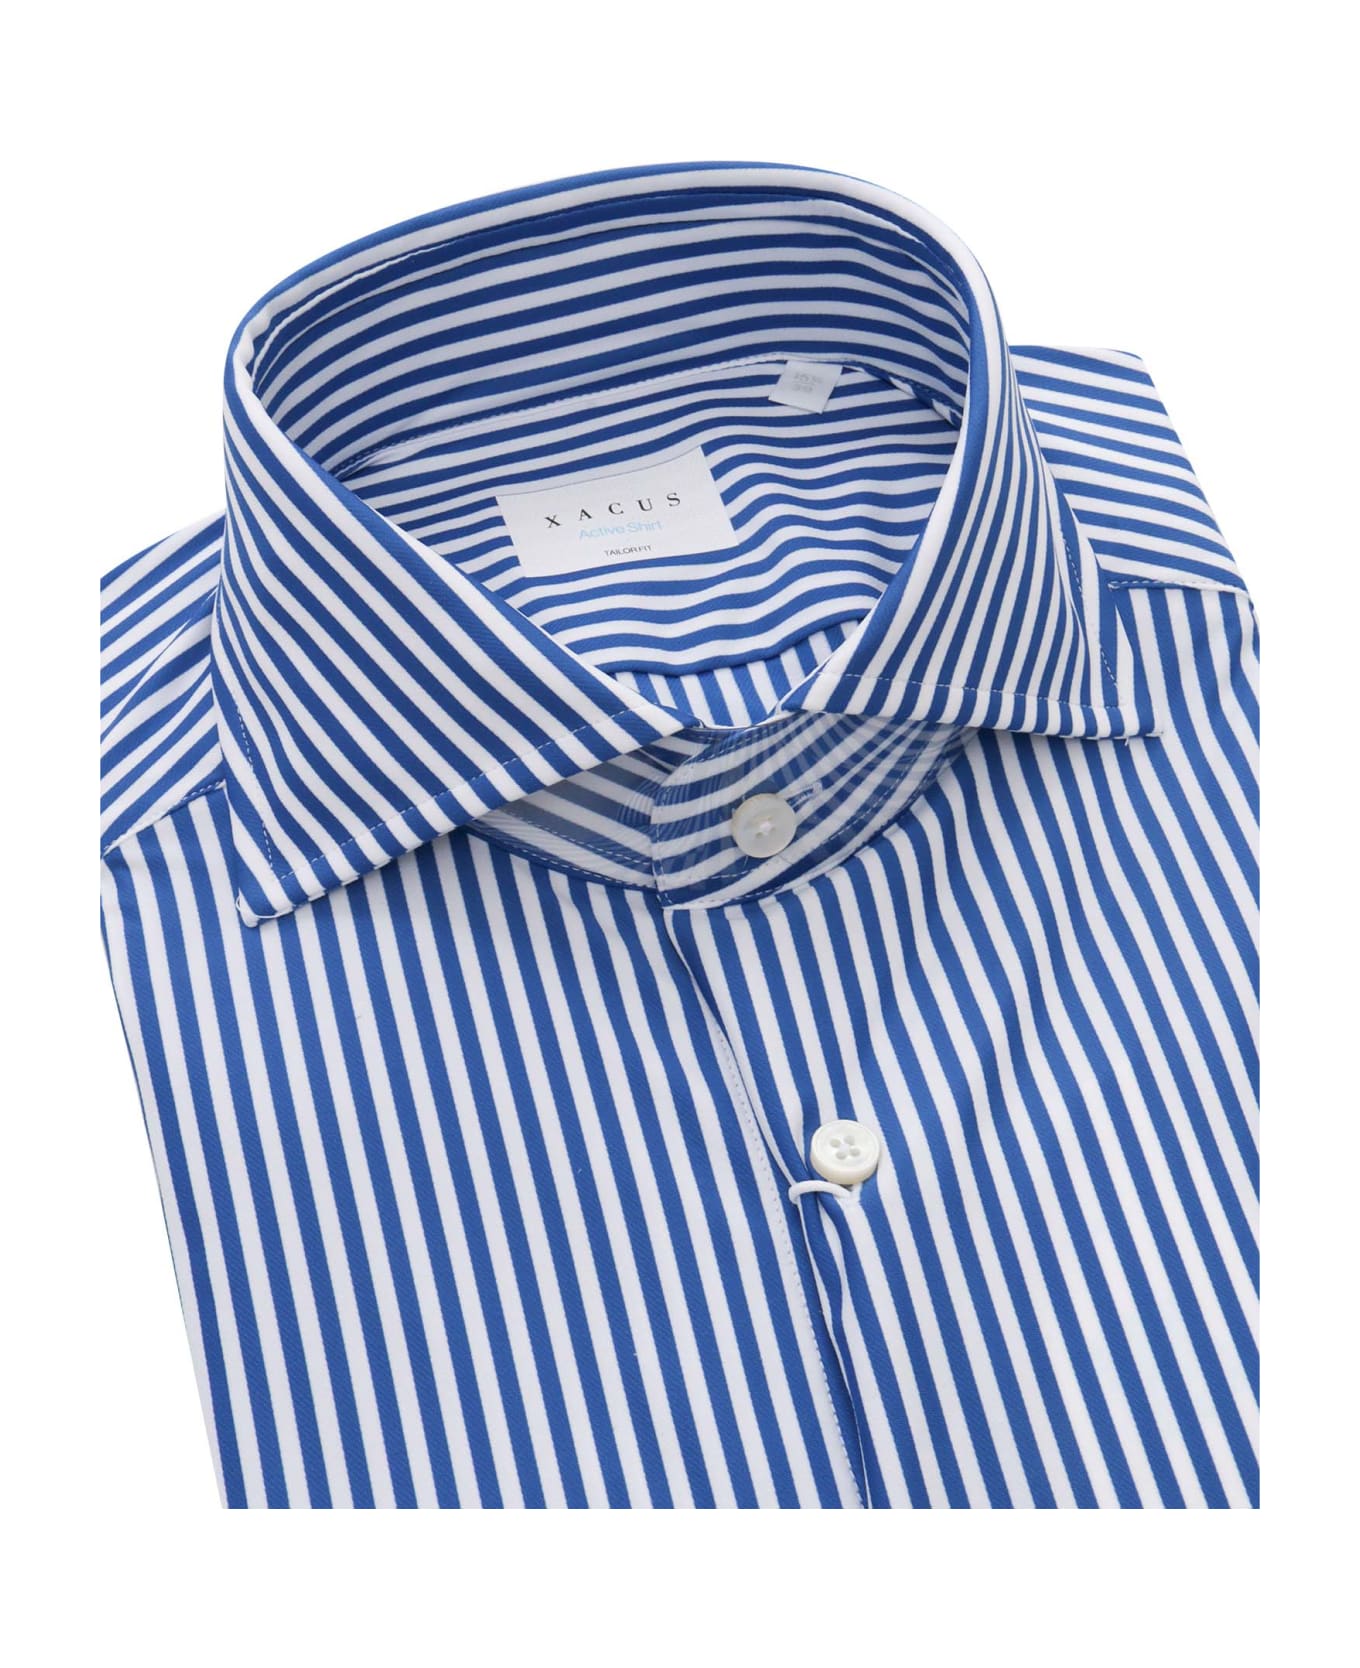 Xacus Blue Striped Shirt - MULTICOLOR シャツ